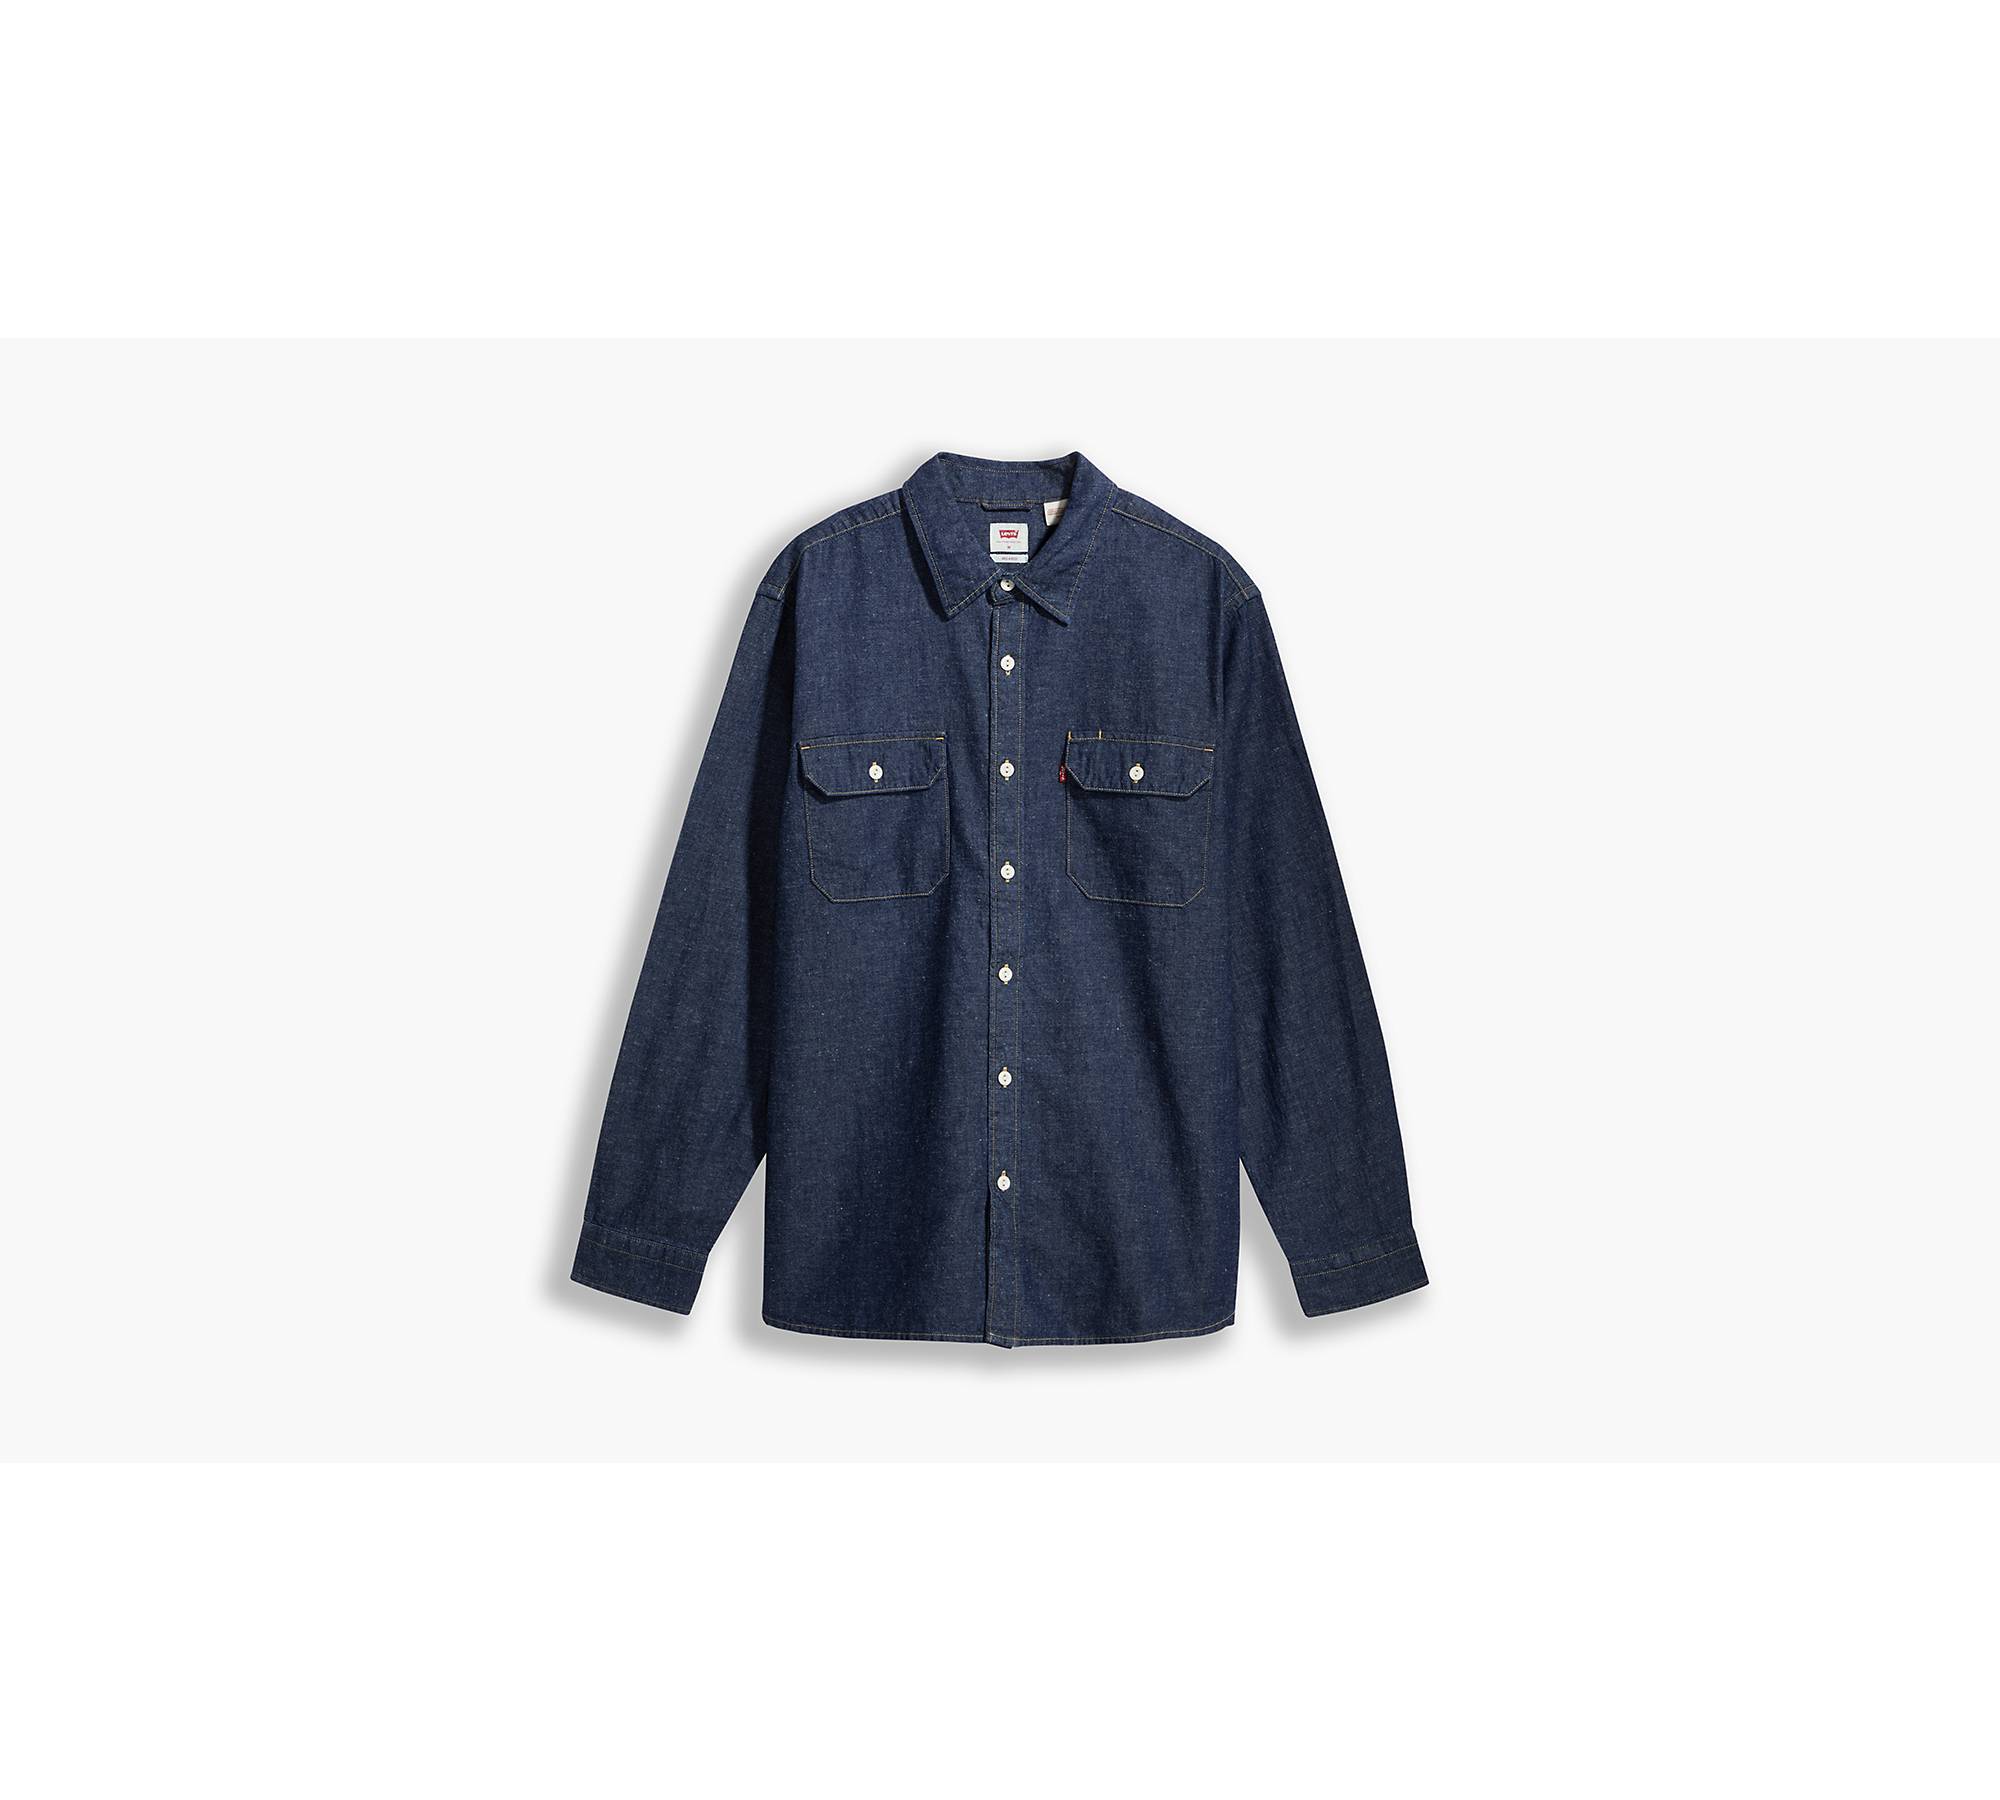 Jackson Worker Shirt - Blue | Levi's® GR